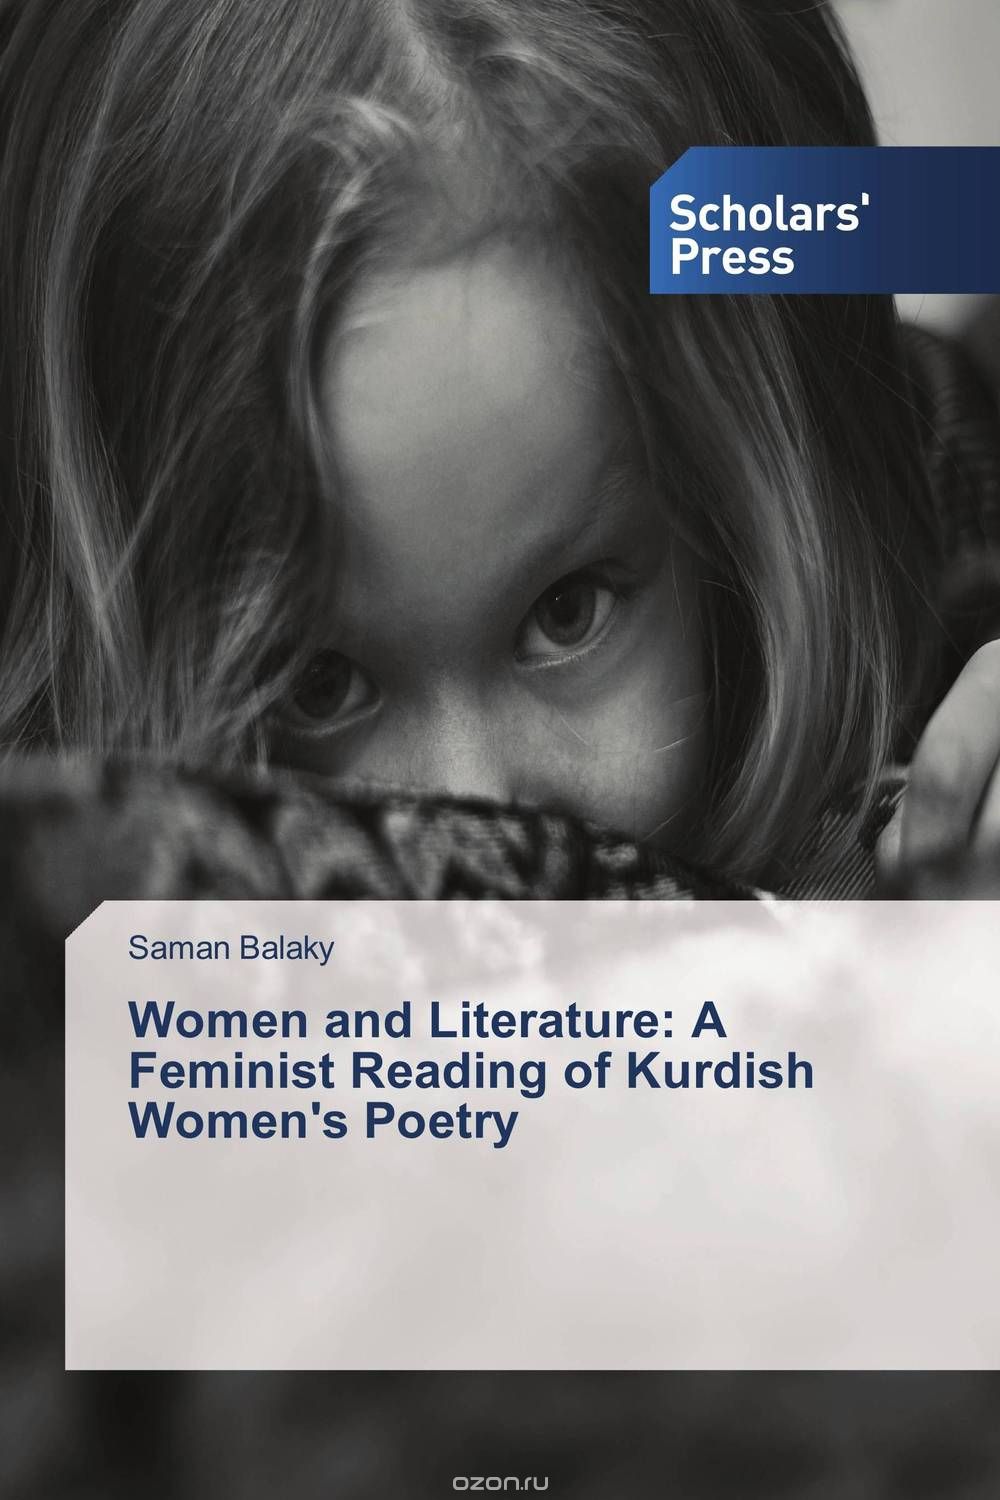 Скачать книгу "Women and Literature: A Feminist Reading of Kurdish Women's Poetry"